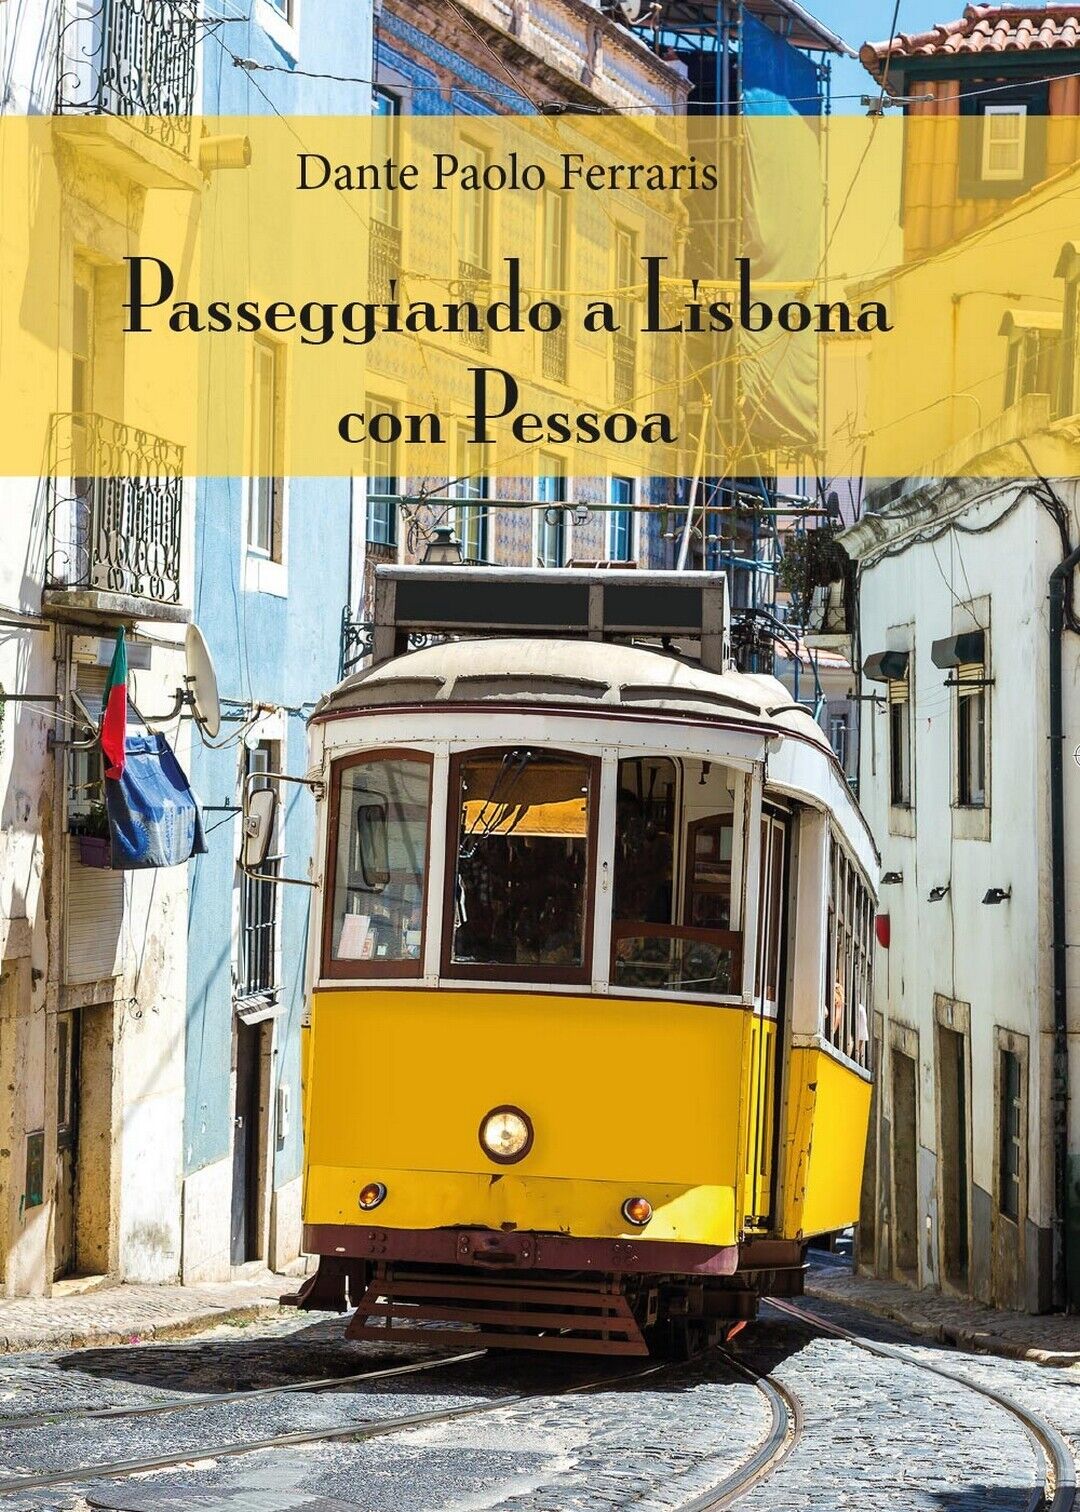 Passeggiando a Lisbona con Pessoa  di Dante Paolo Ferraris,  2016,  Youcanprint libro usato